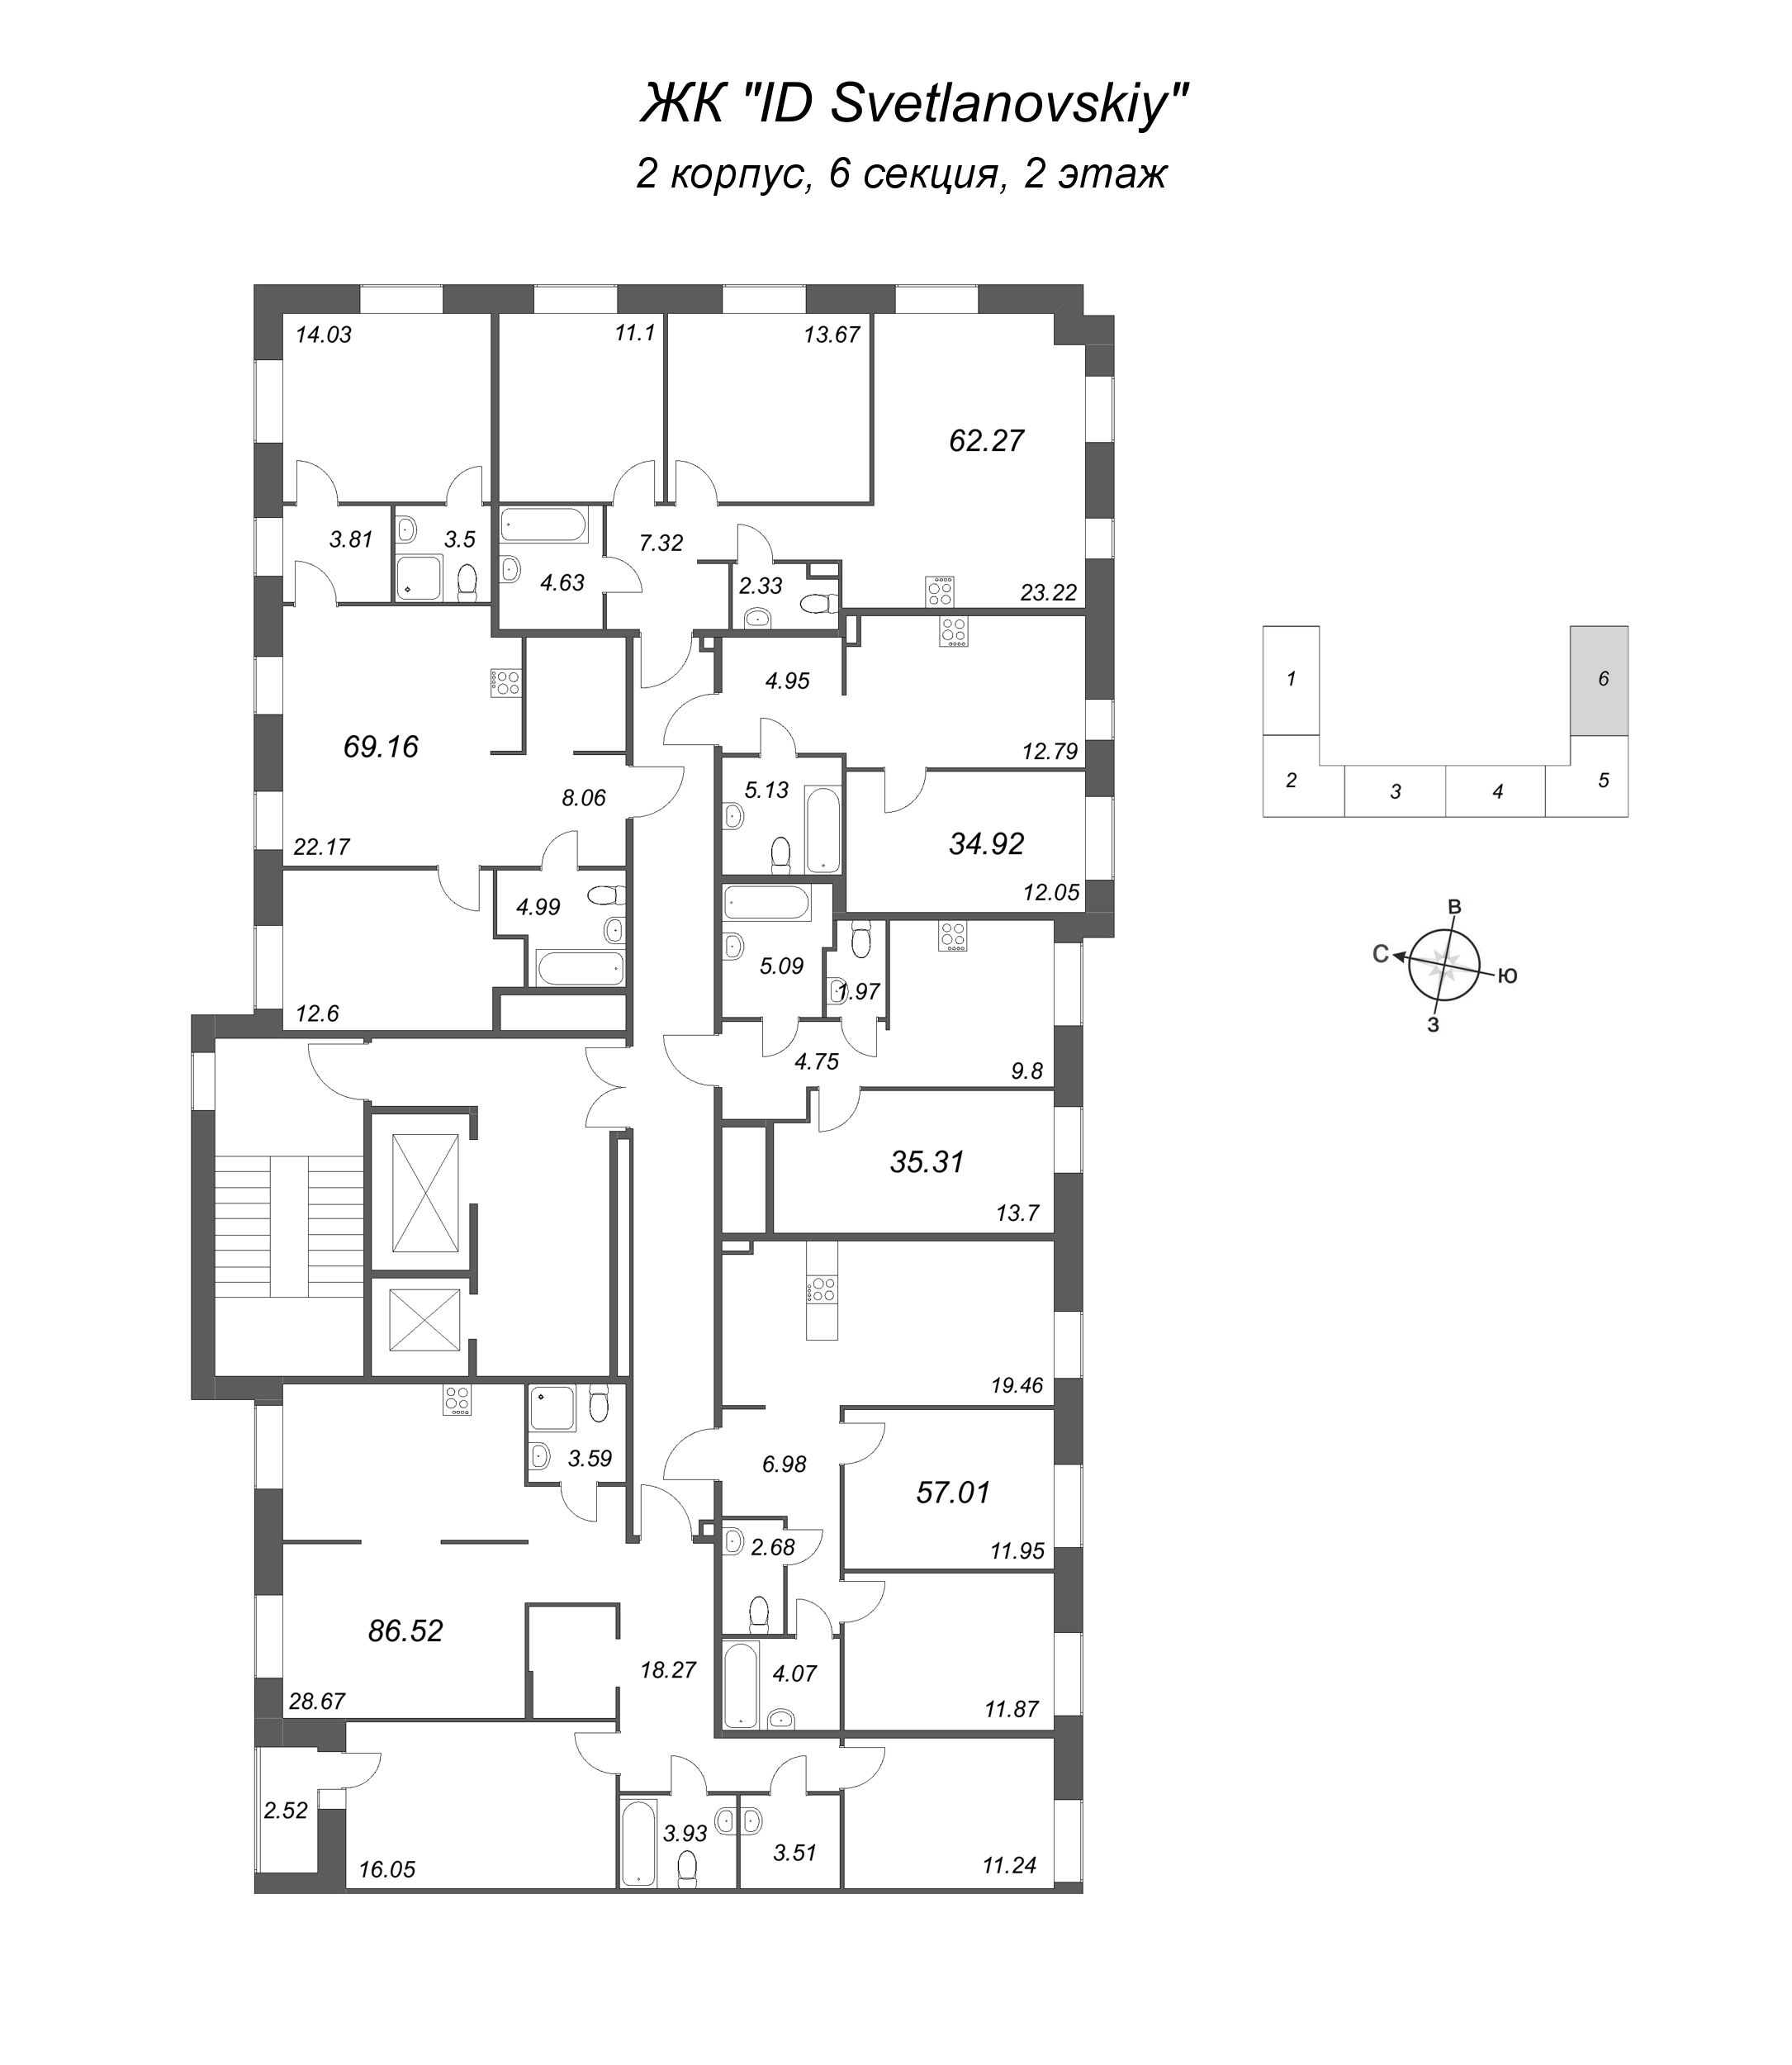 3-комнатная (Евро) квартира, 57.01 м² - планировка этажа